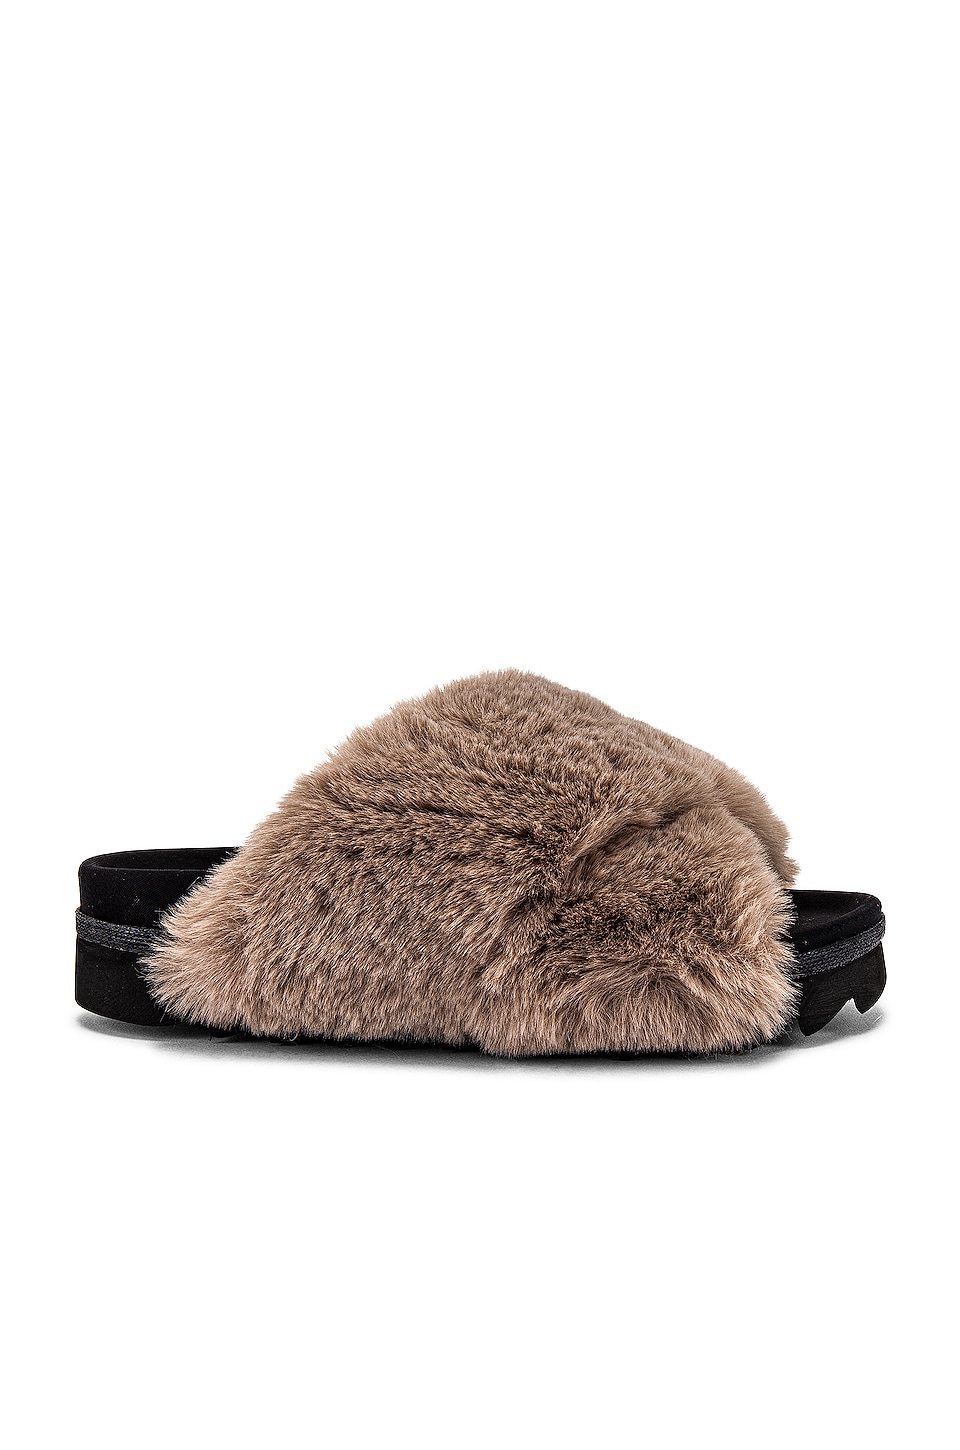 revolve.com | Cloud Faux Fur Slippers